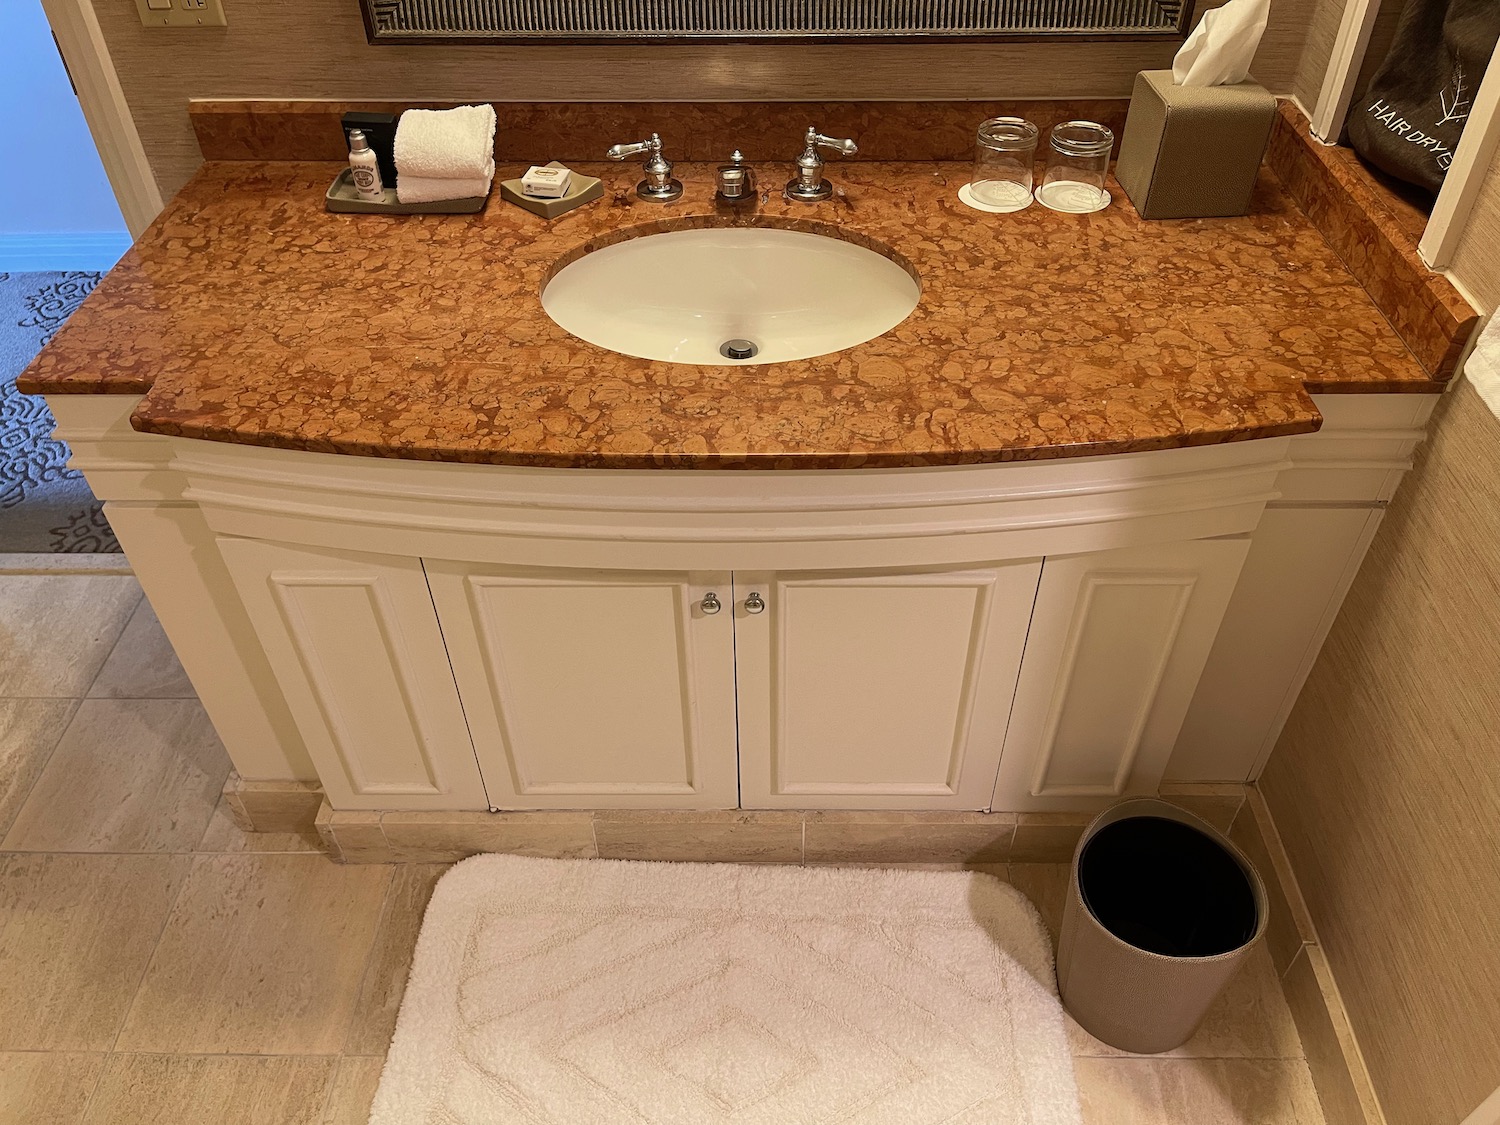 a bathroom sink with a white rug